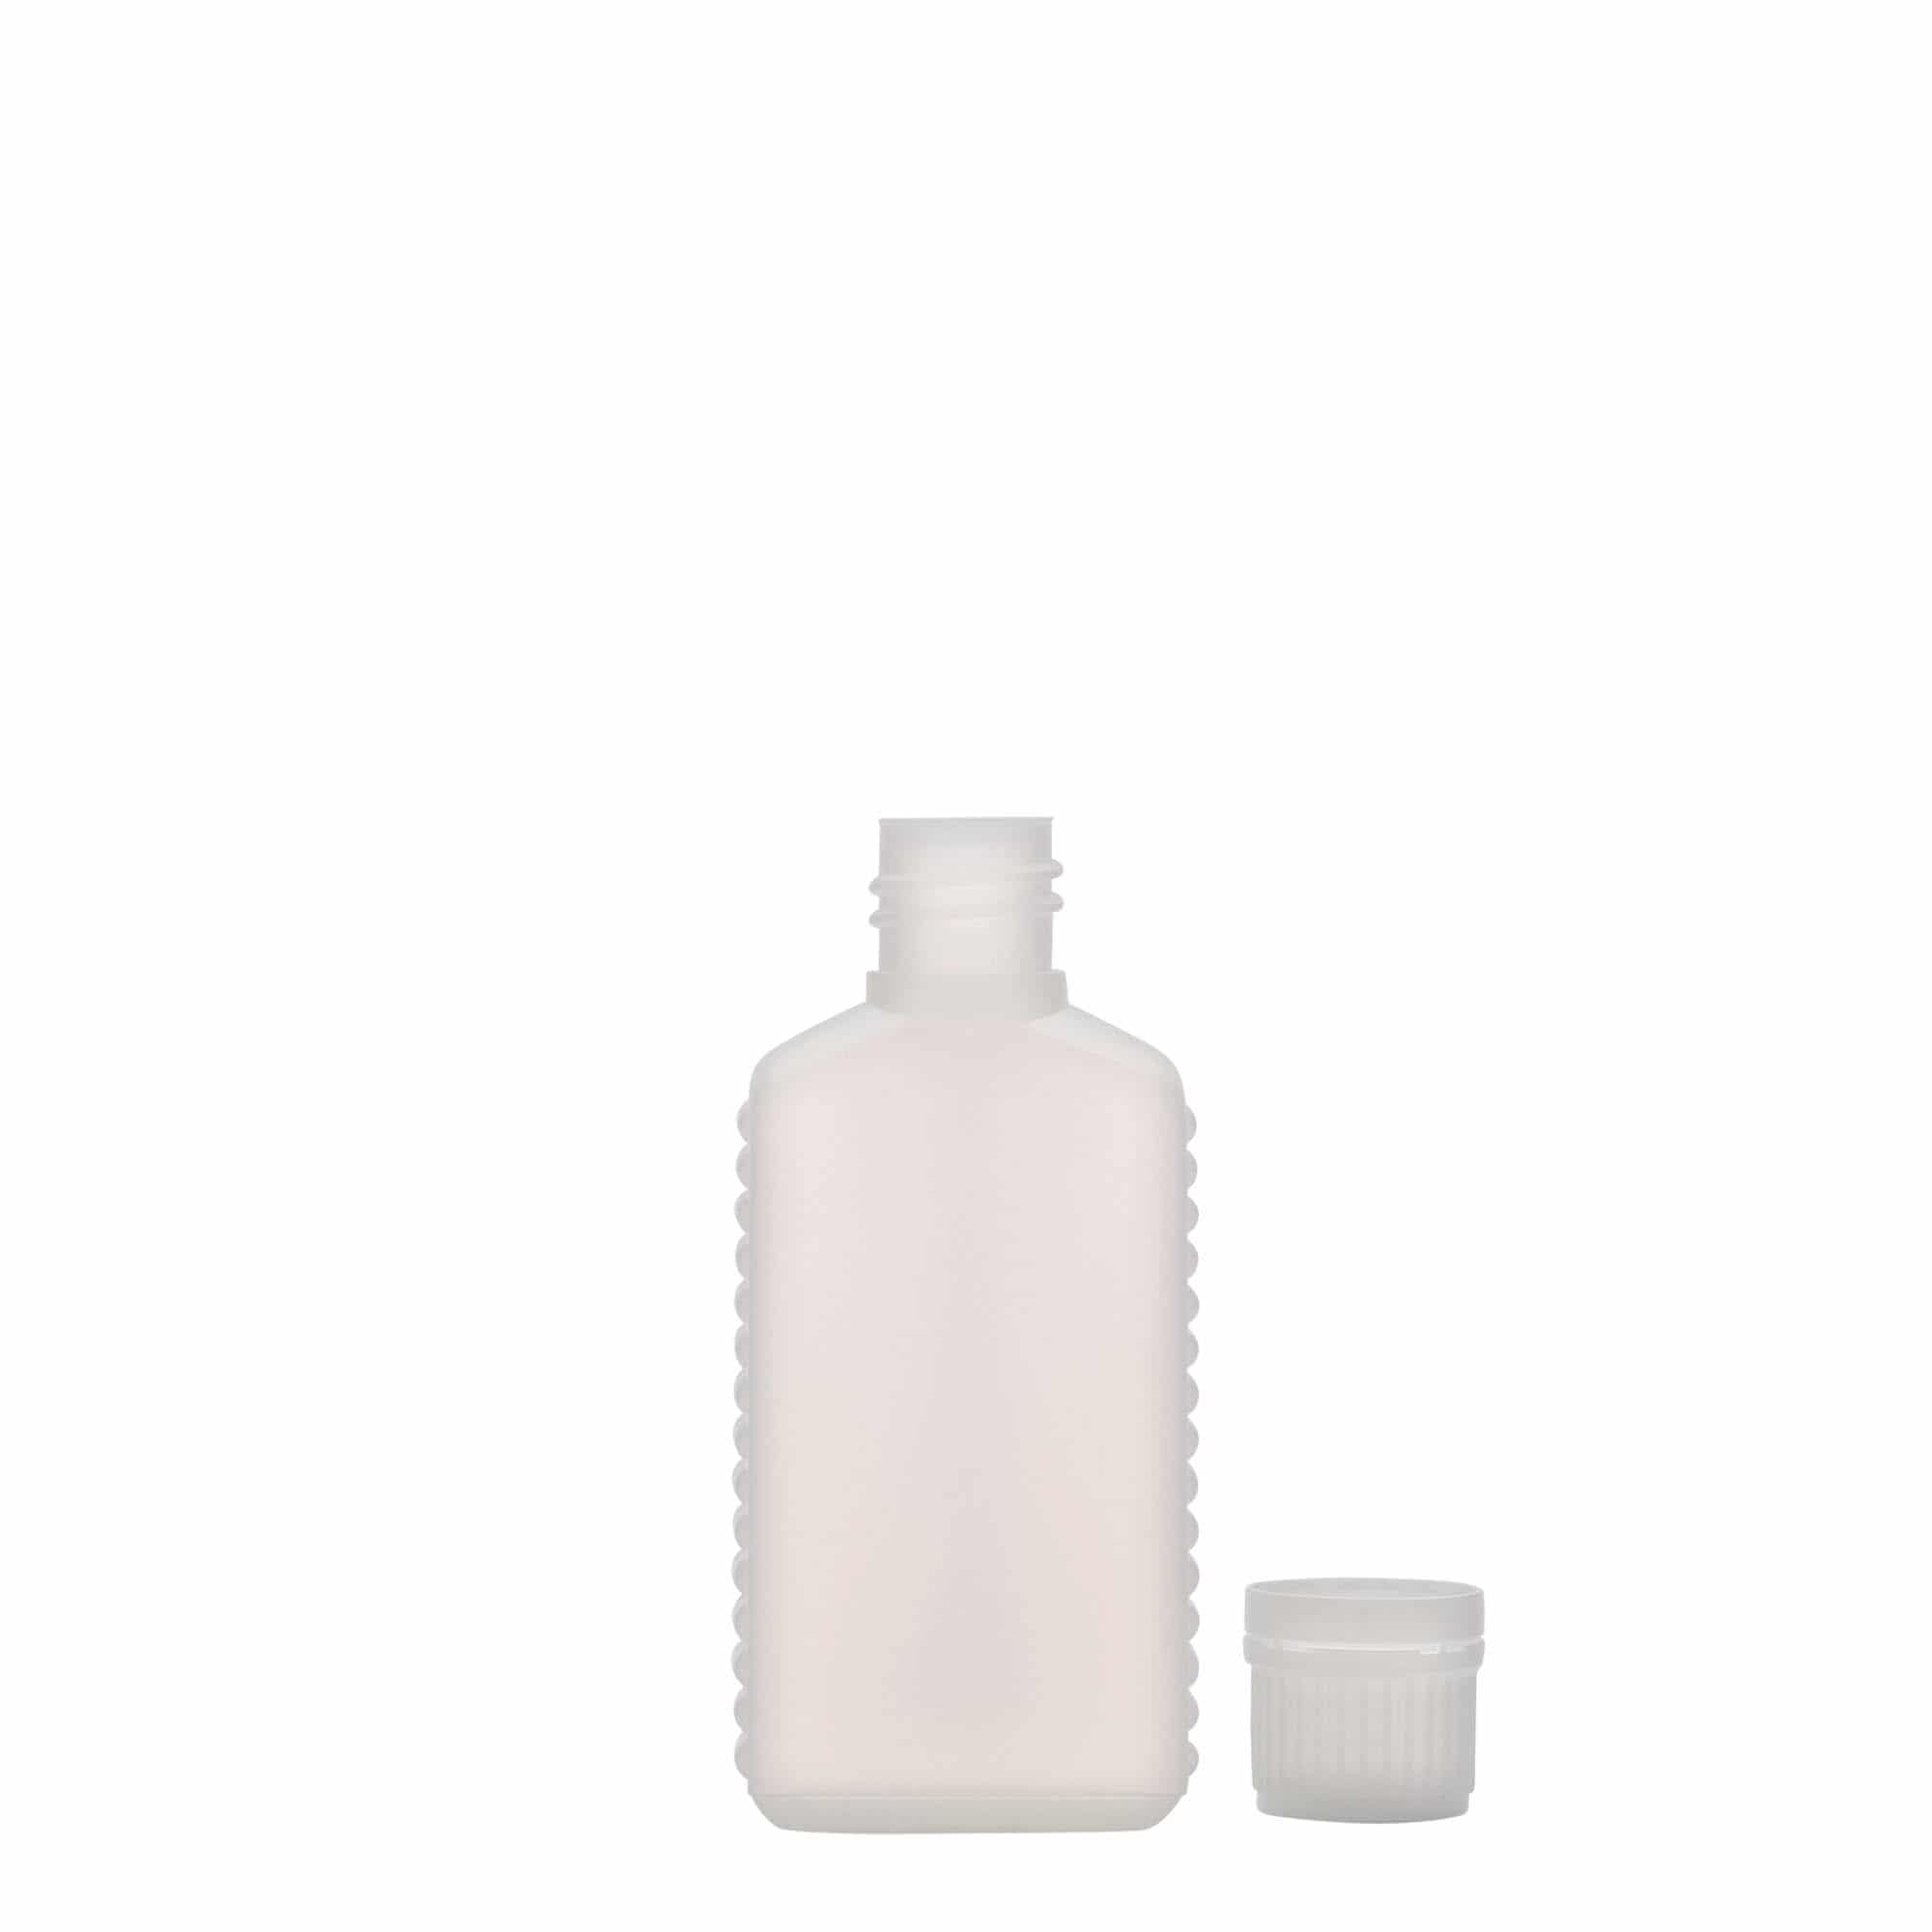 50 ml narrow neck canister bottle, rectangular, HDPE plastic, natural, closure: DIN 18